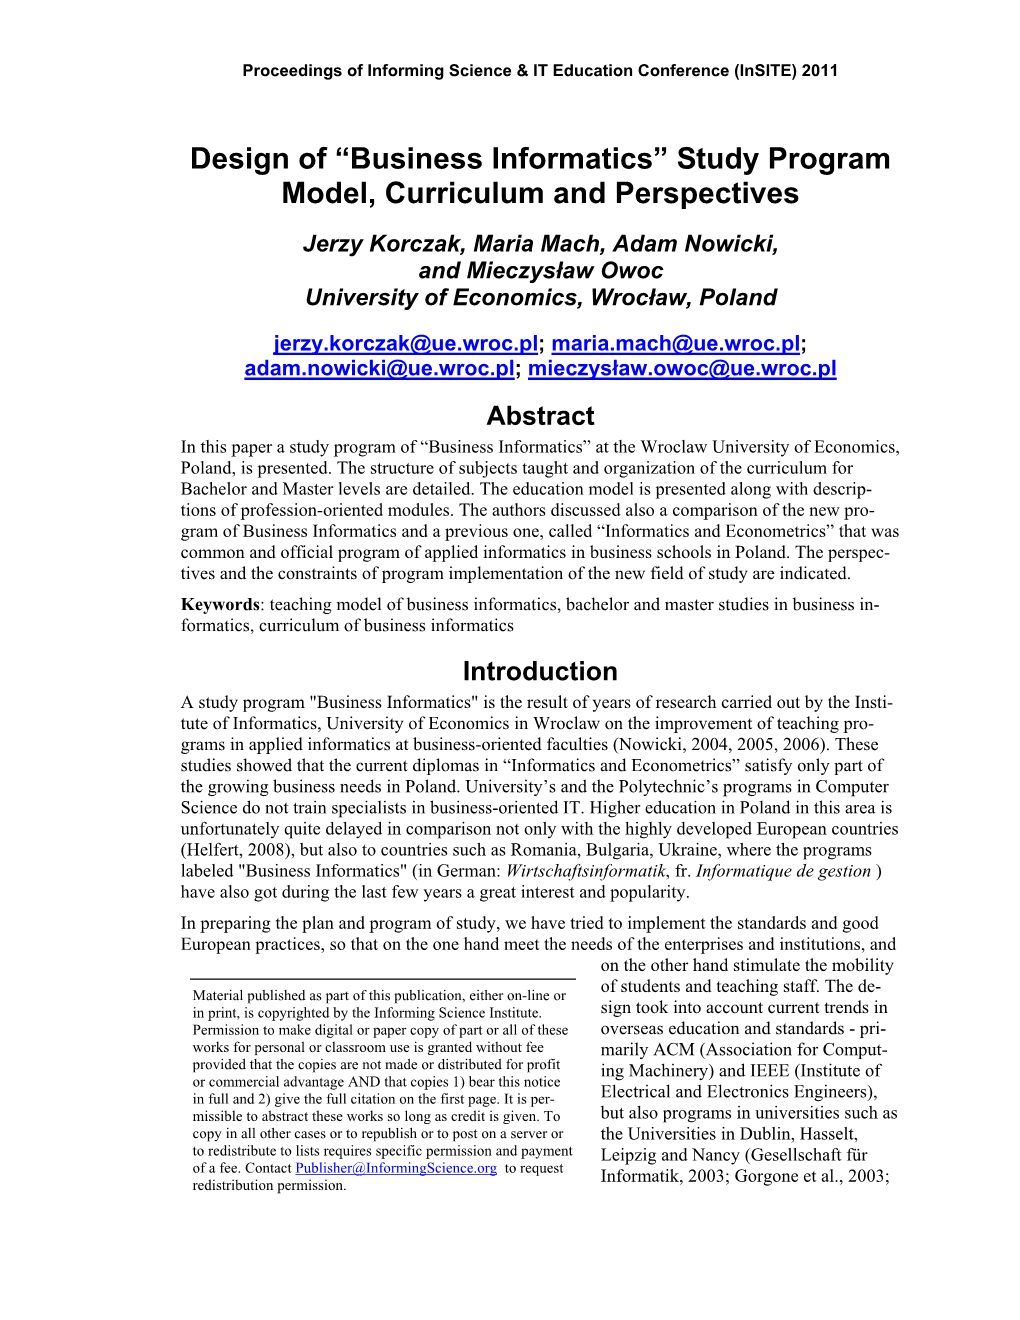 Design of “Business Informatics” Study Program Model, Curriculum and Perspectives